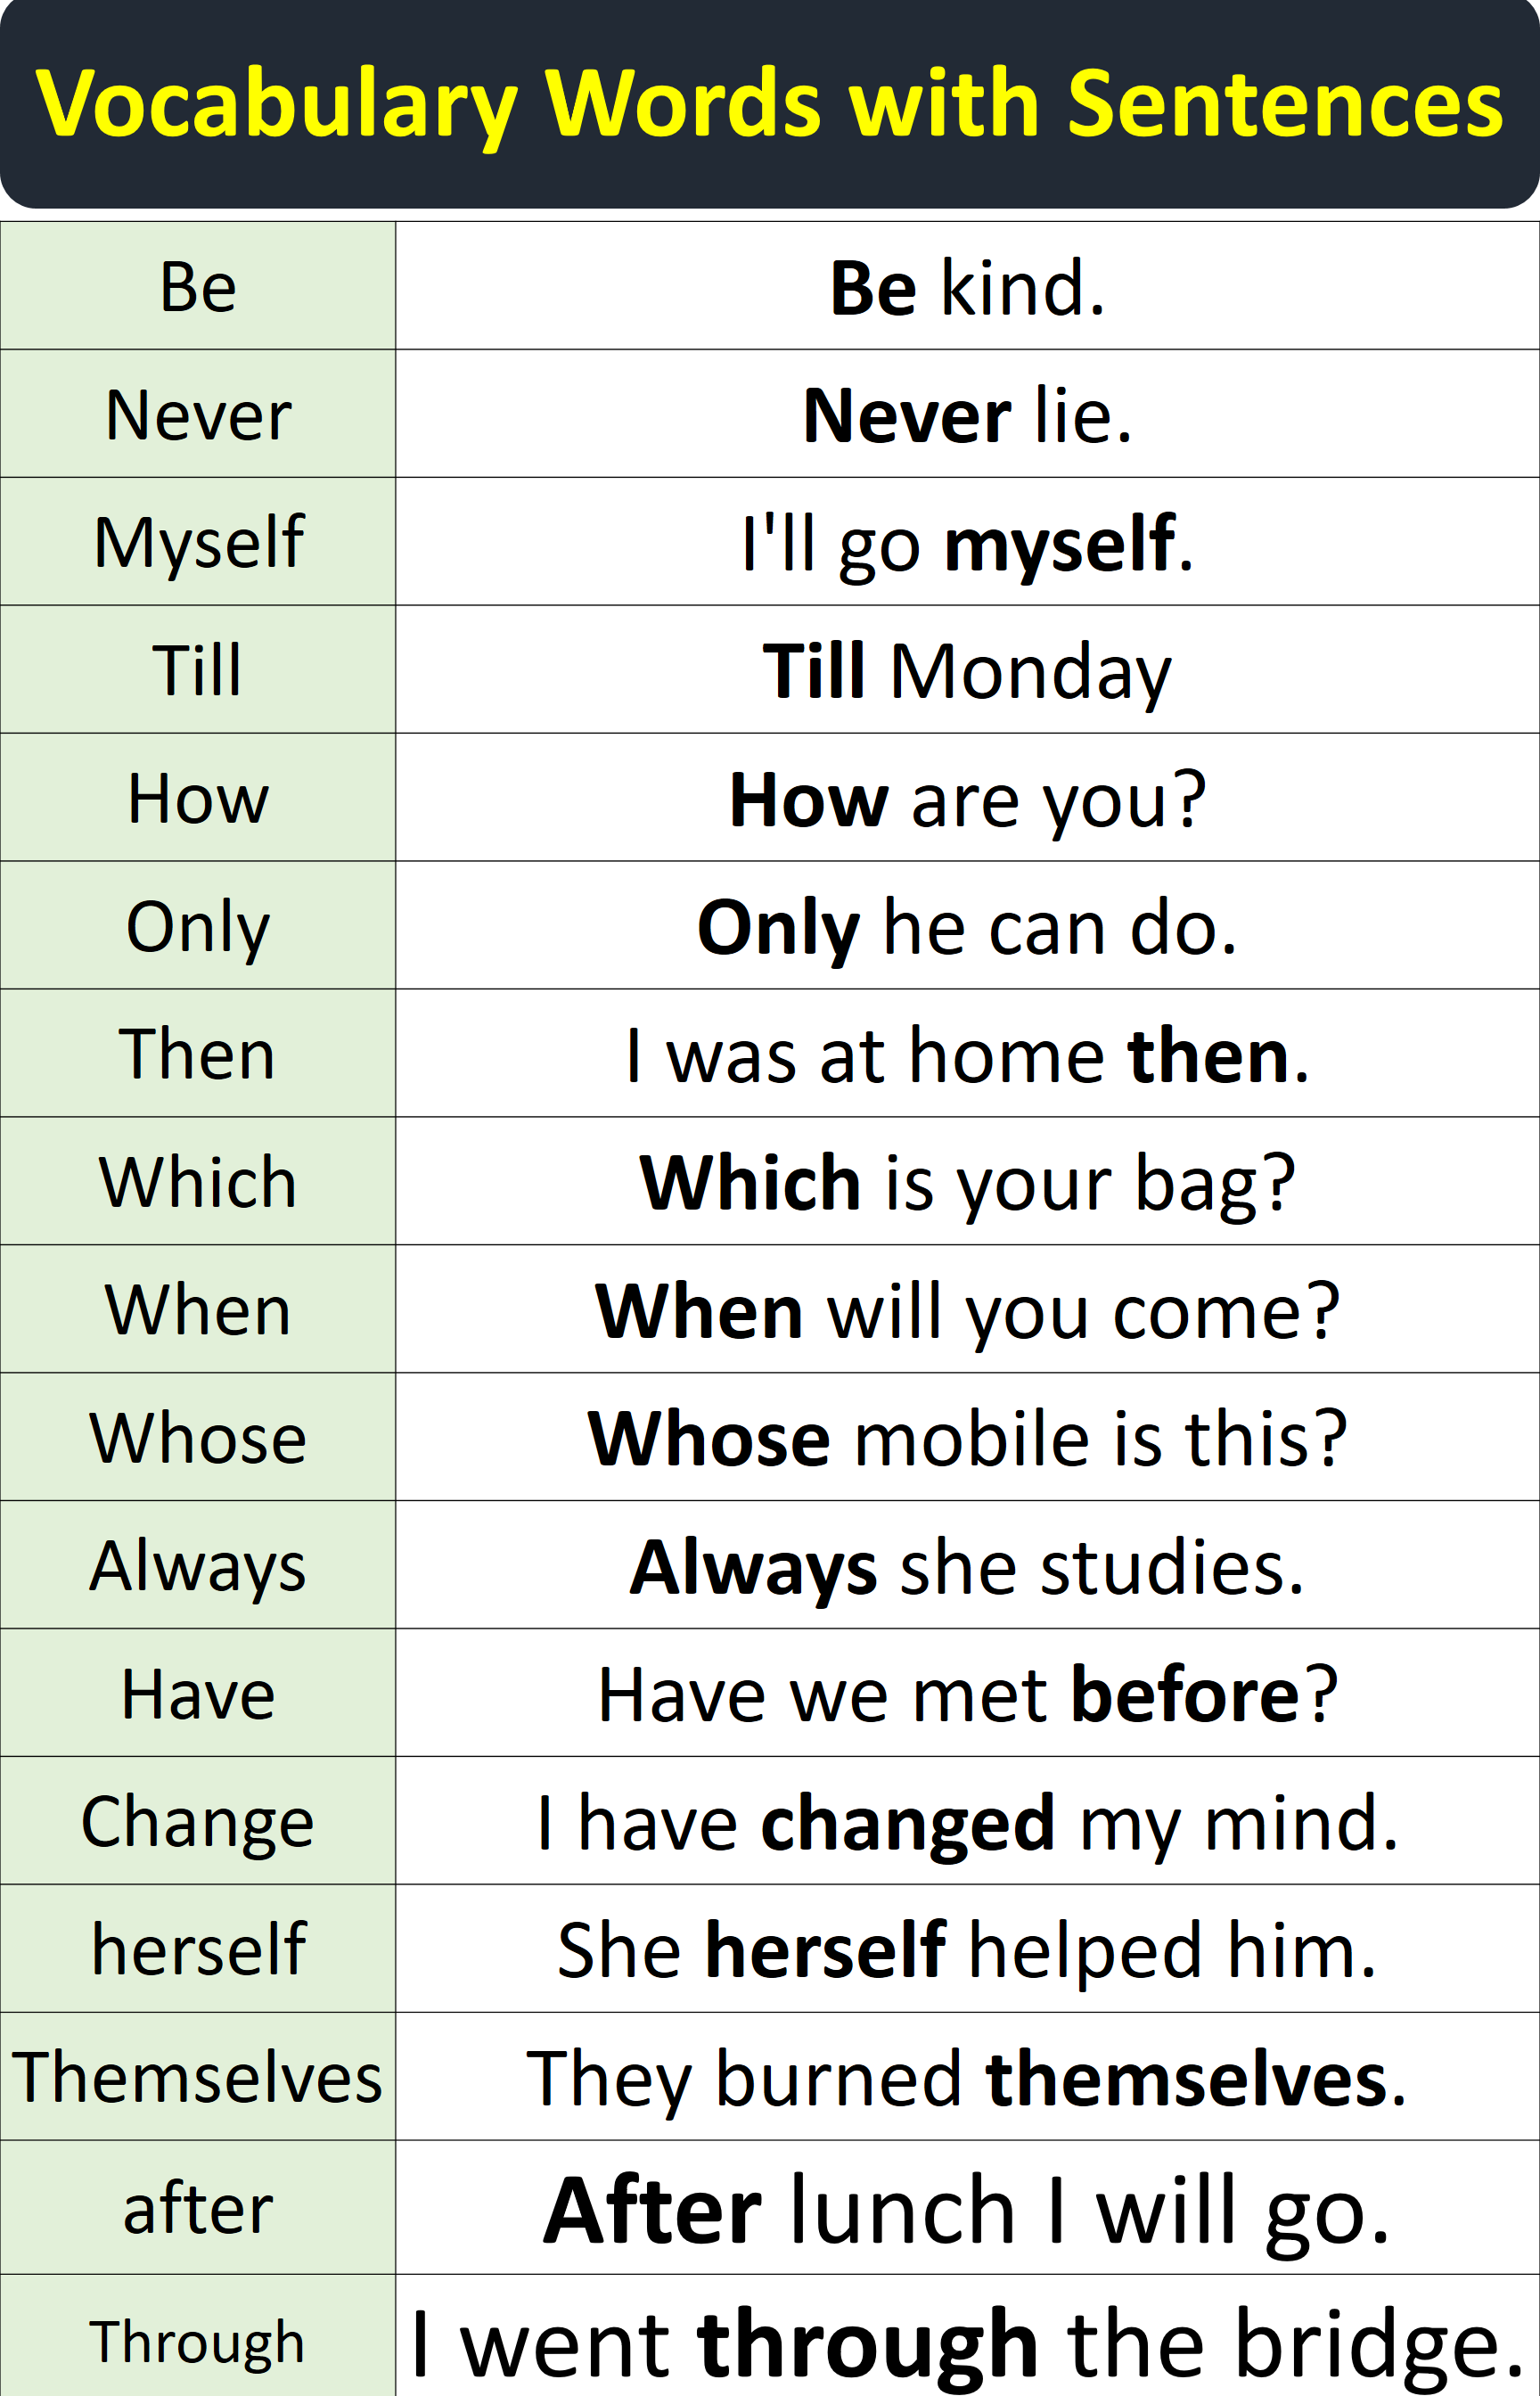 English Vocabulary Words With Sentences